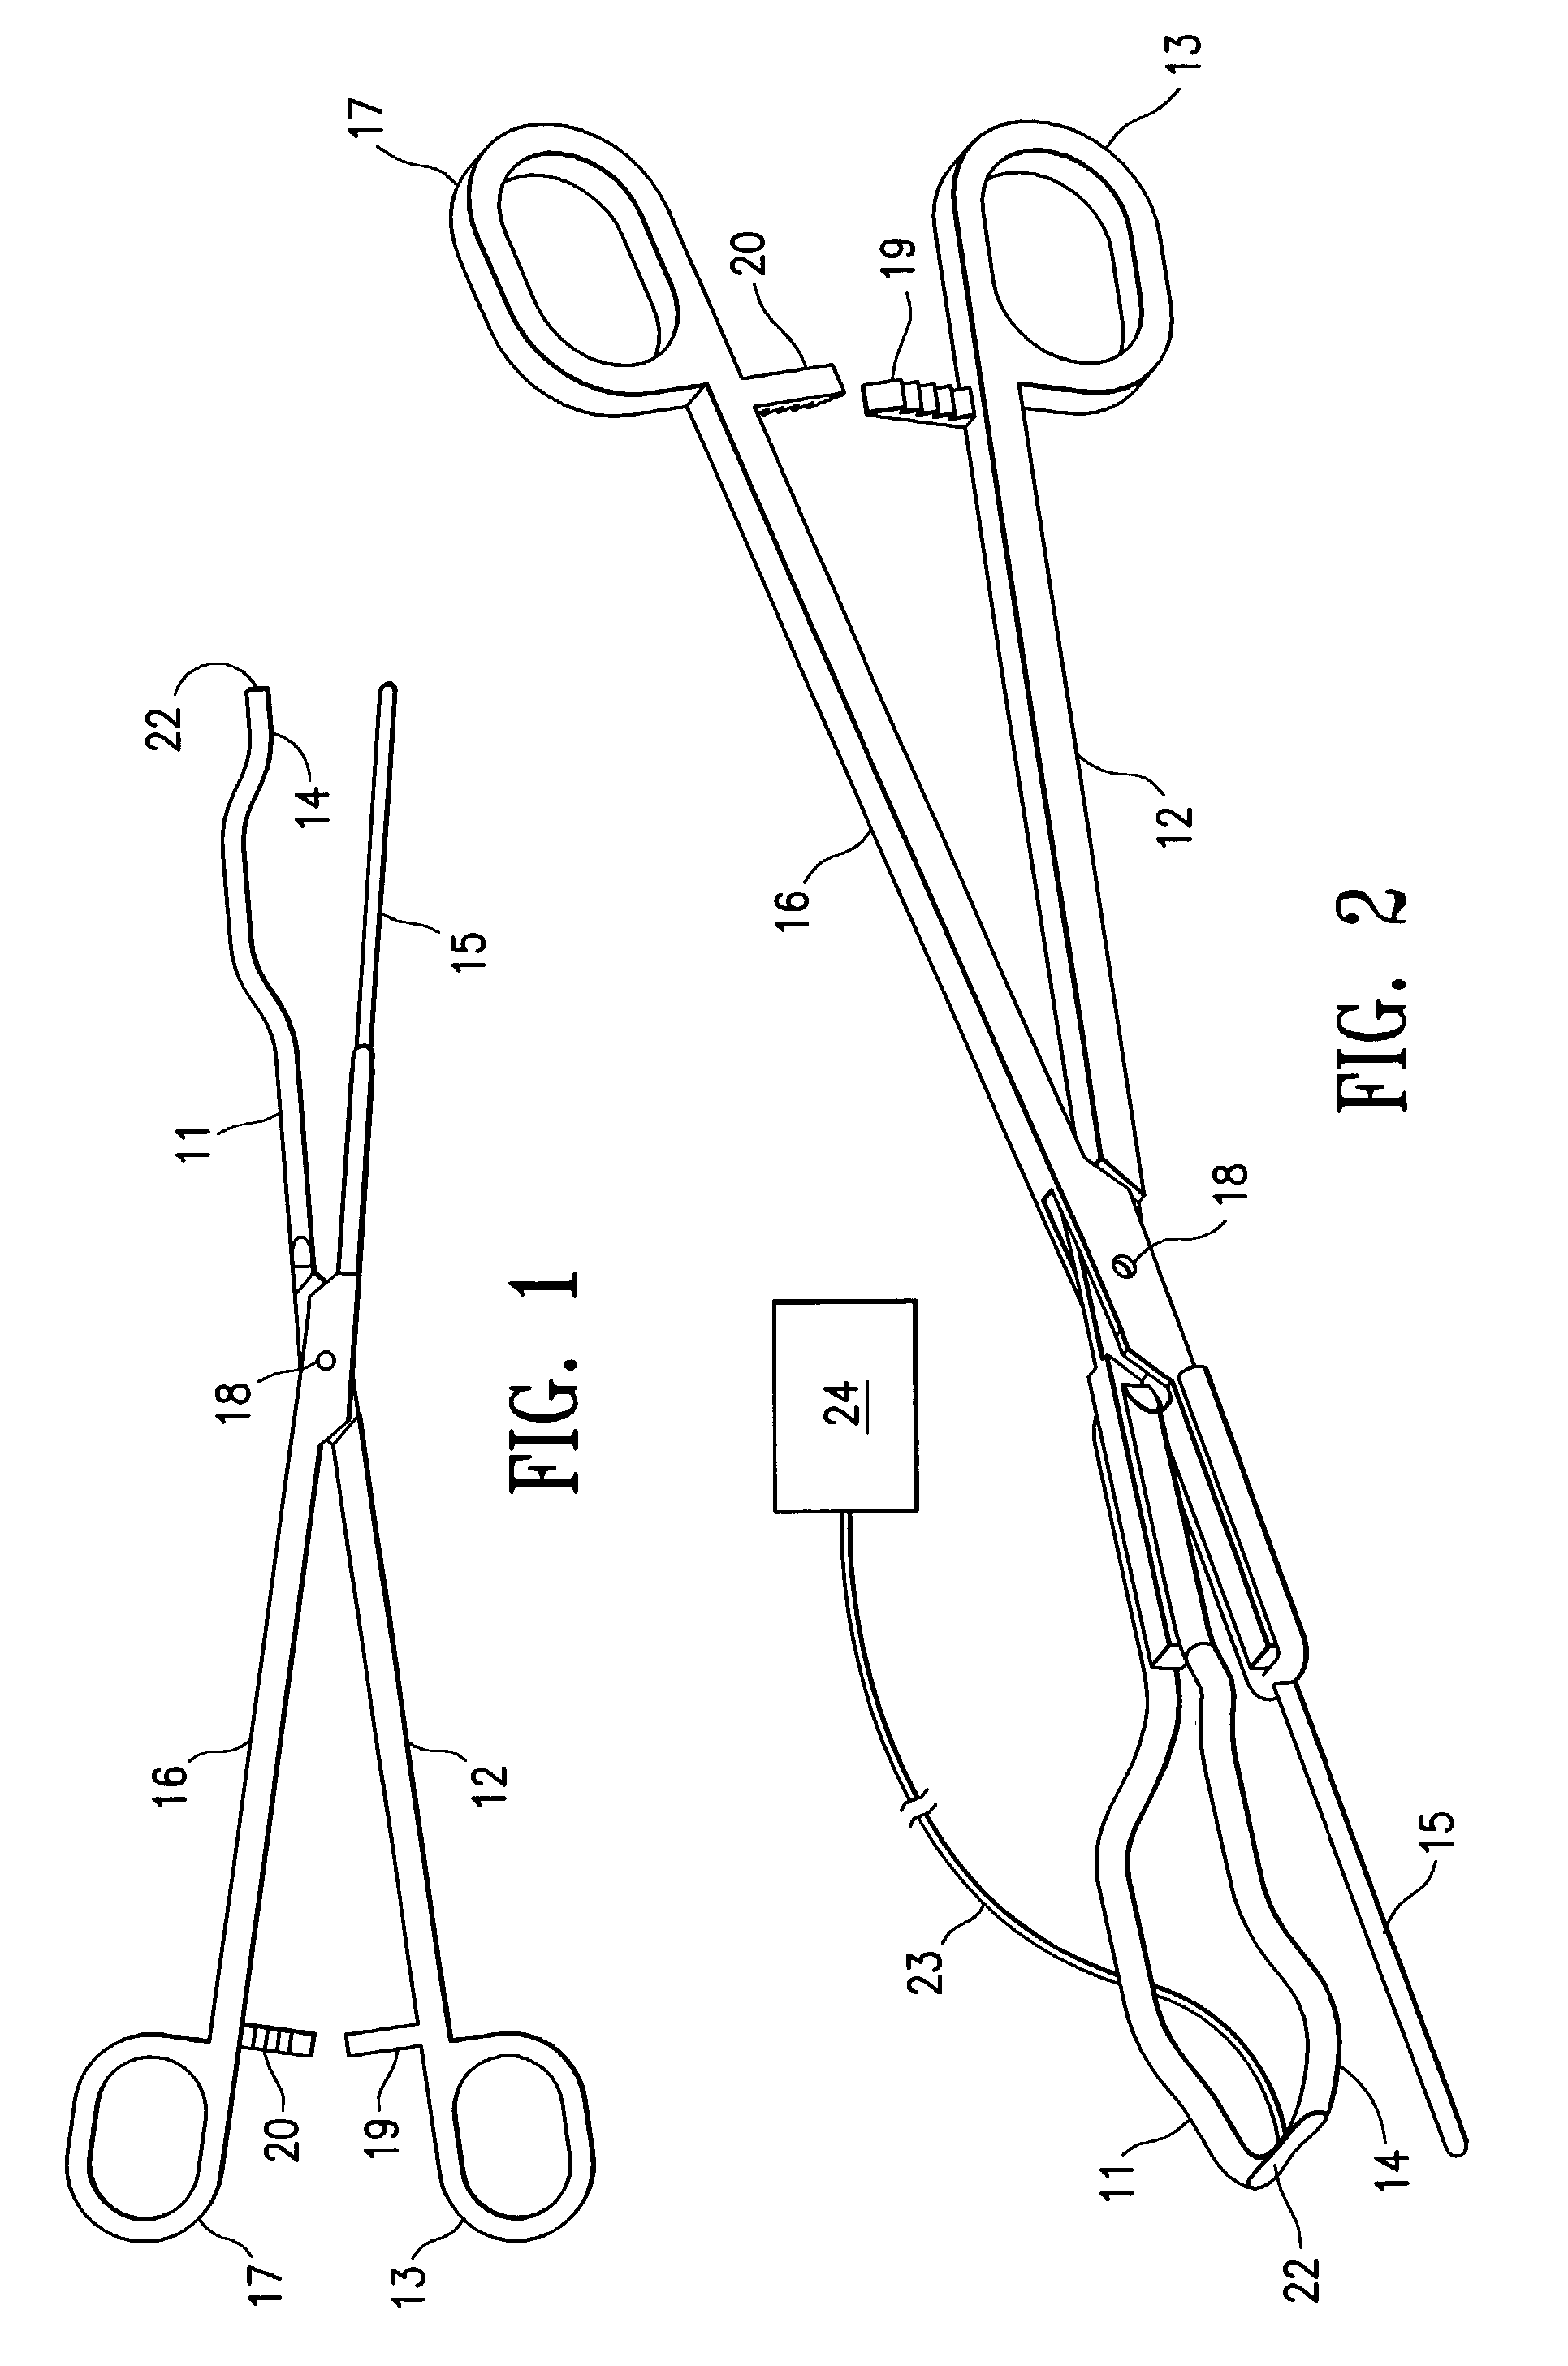 Uterine artery occlusion clamp